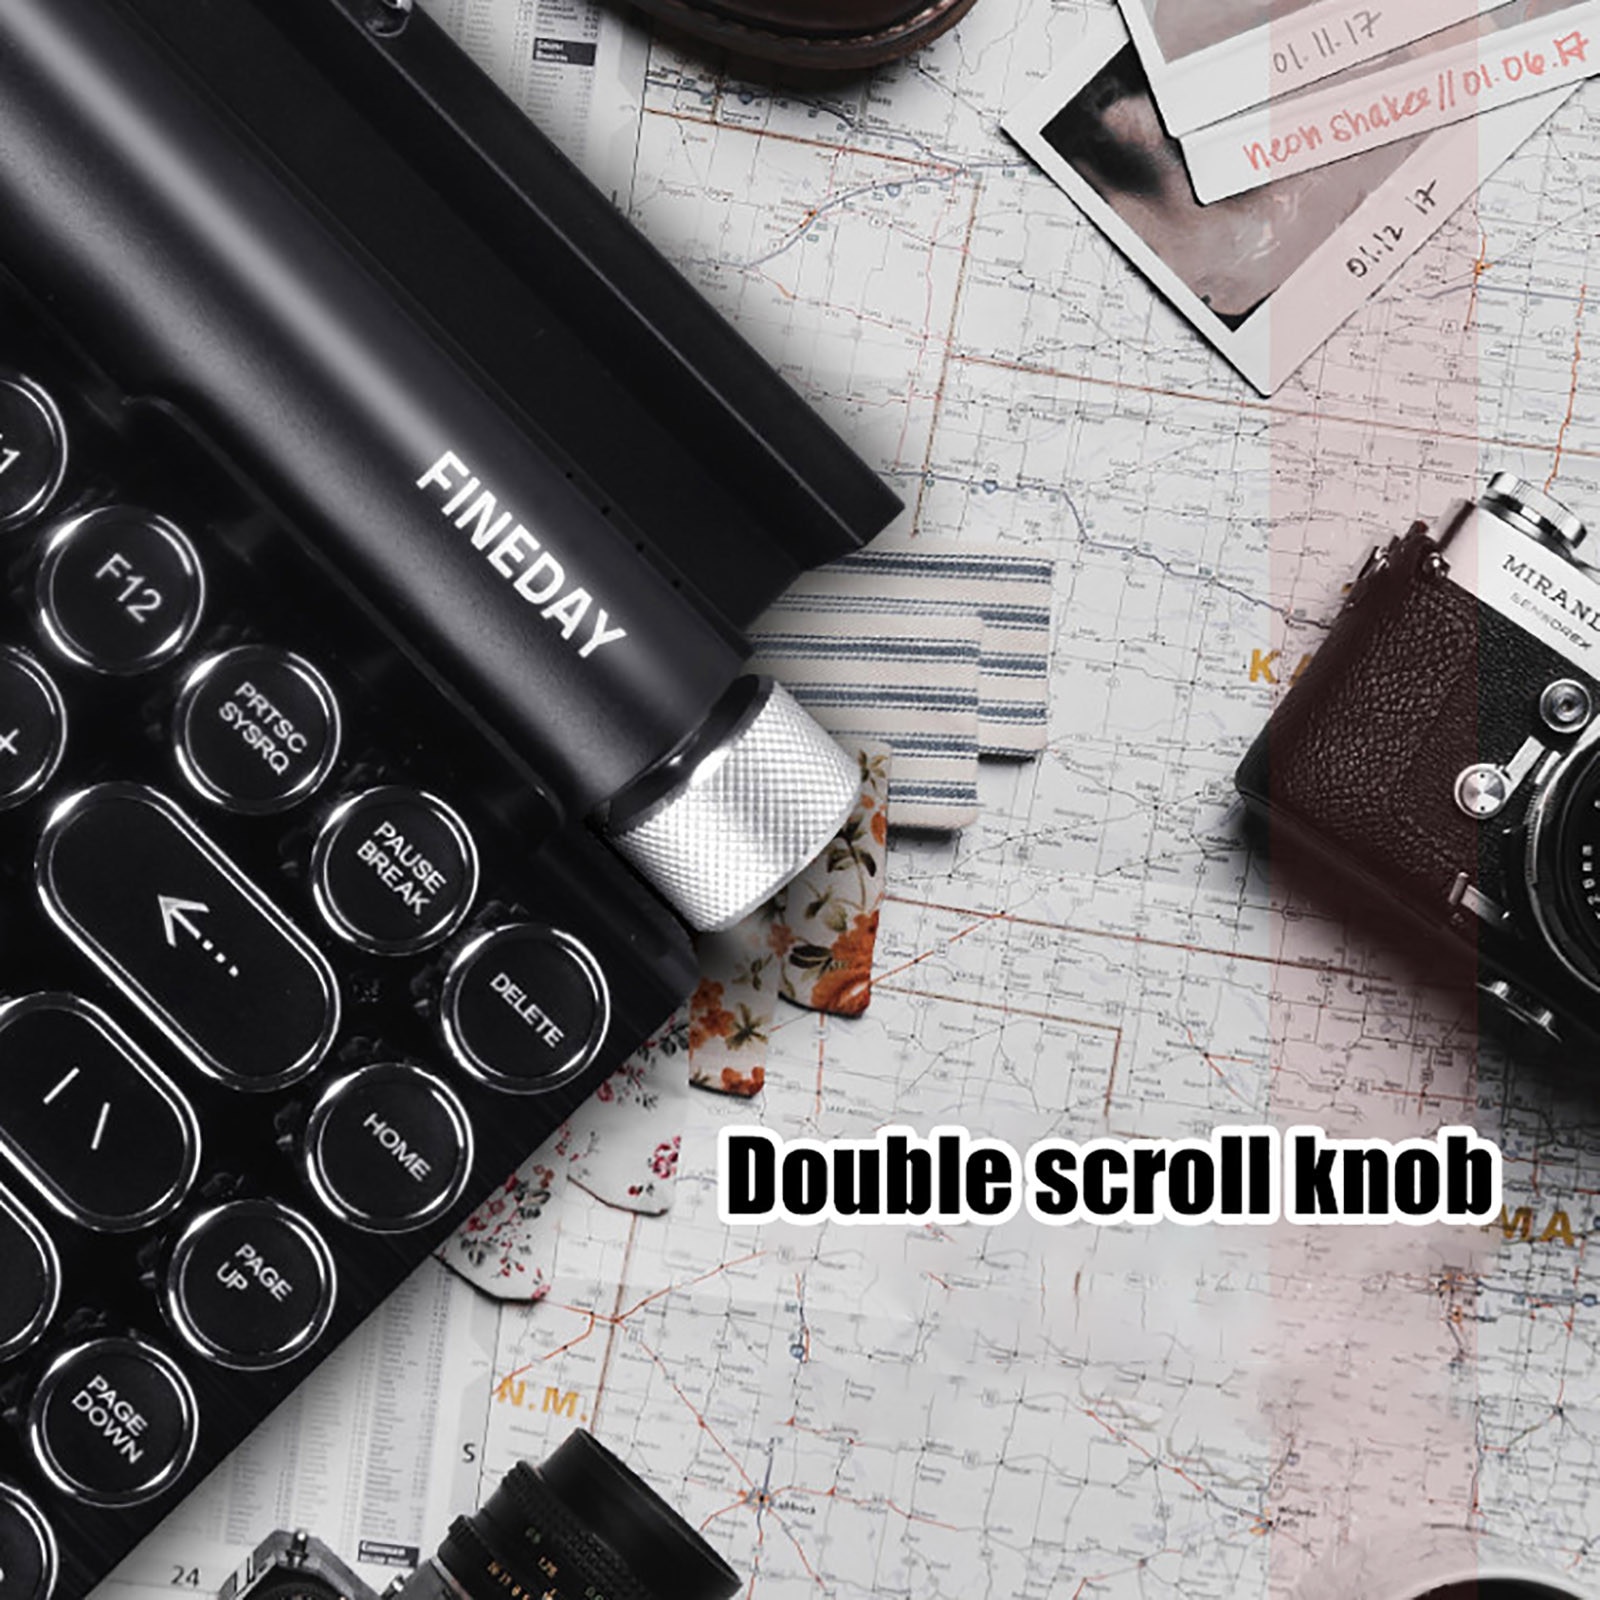 83 Key Dot Retro Typewriter Keyboard Wireless Bluetooth Mechanical Keyboard gamekeyboard Teclado mecánico de máquina de escribir